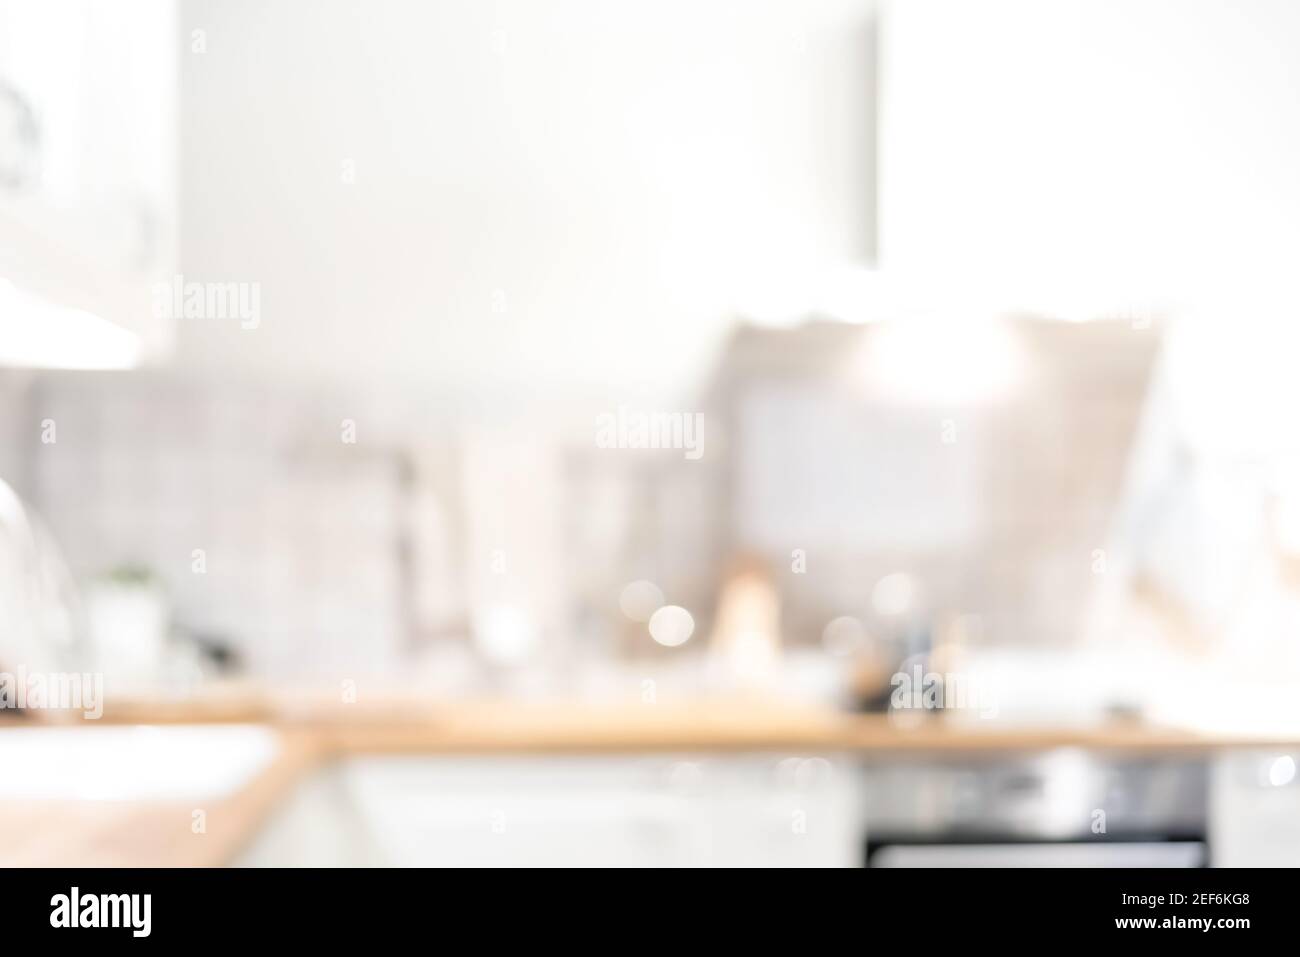 Blur white kitchen interior for background Stock Photo